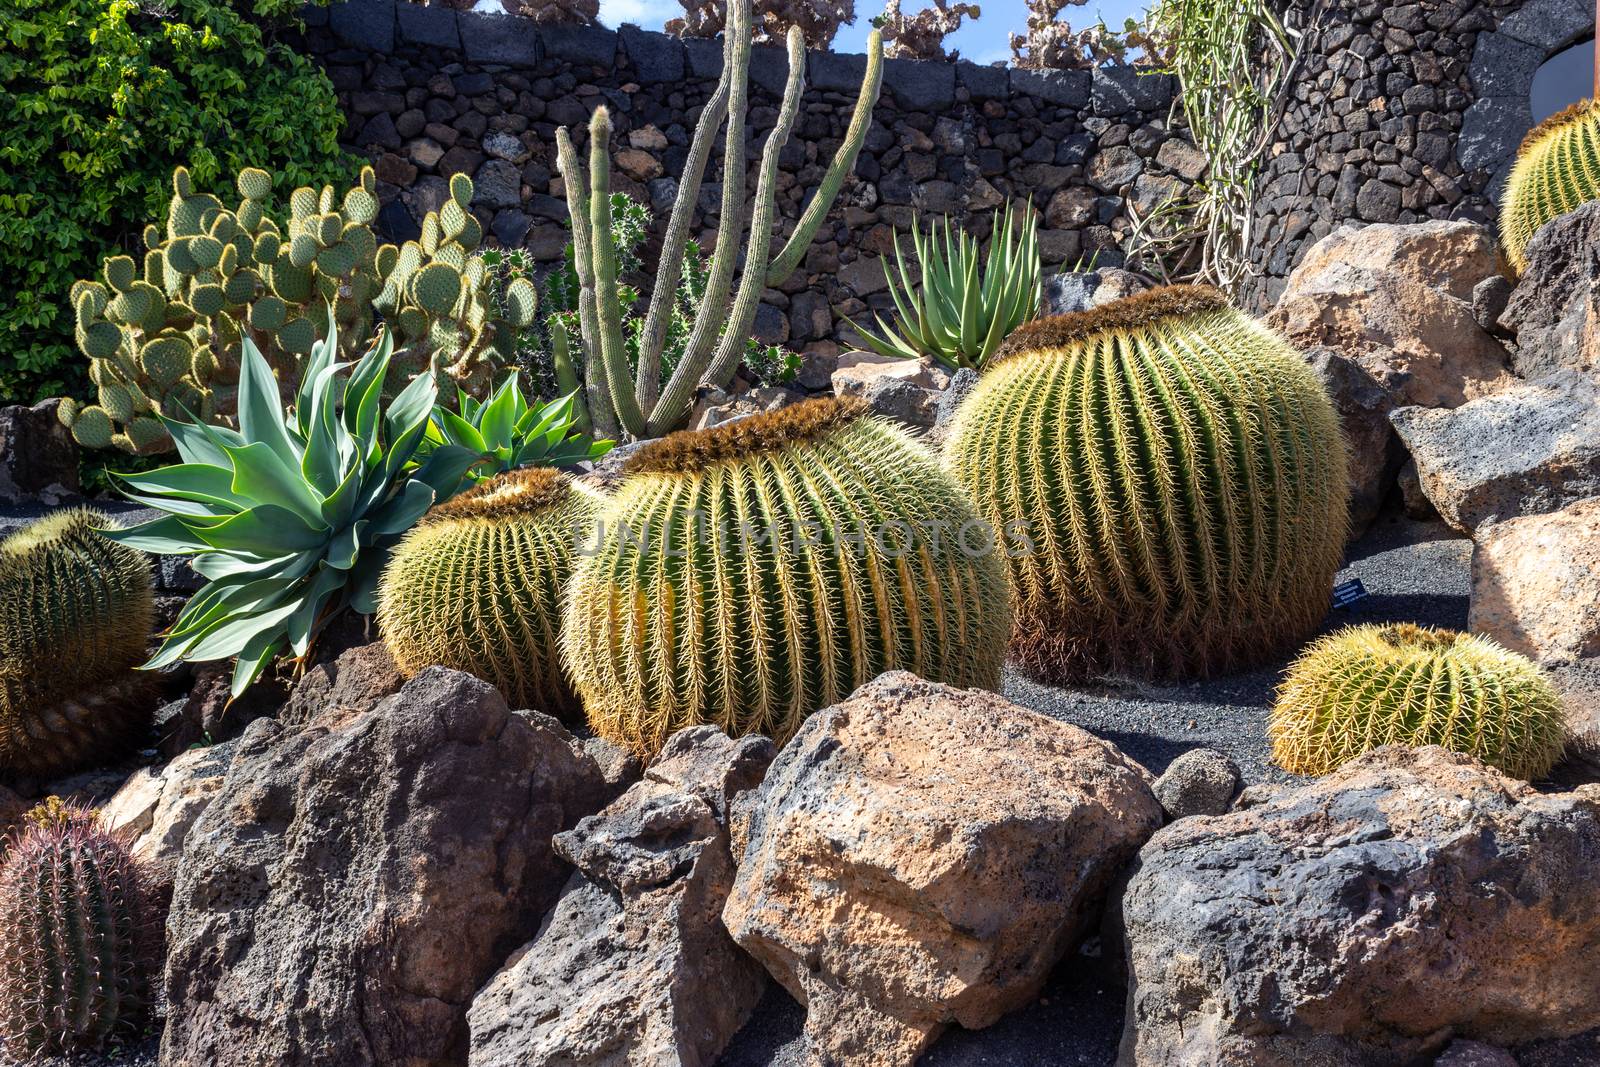 Different types of cactus in Jardin de Cactus by Cesar Manrique  by reinerc